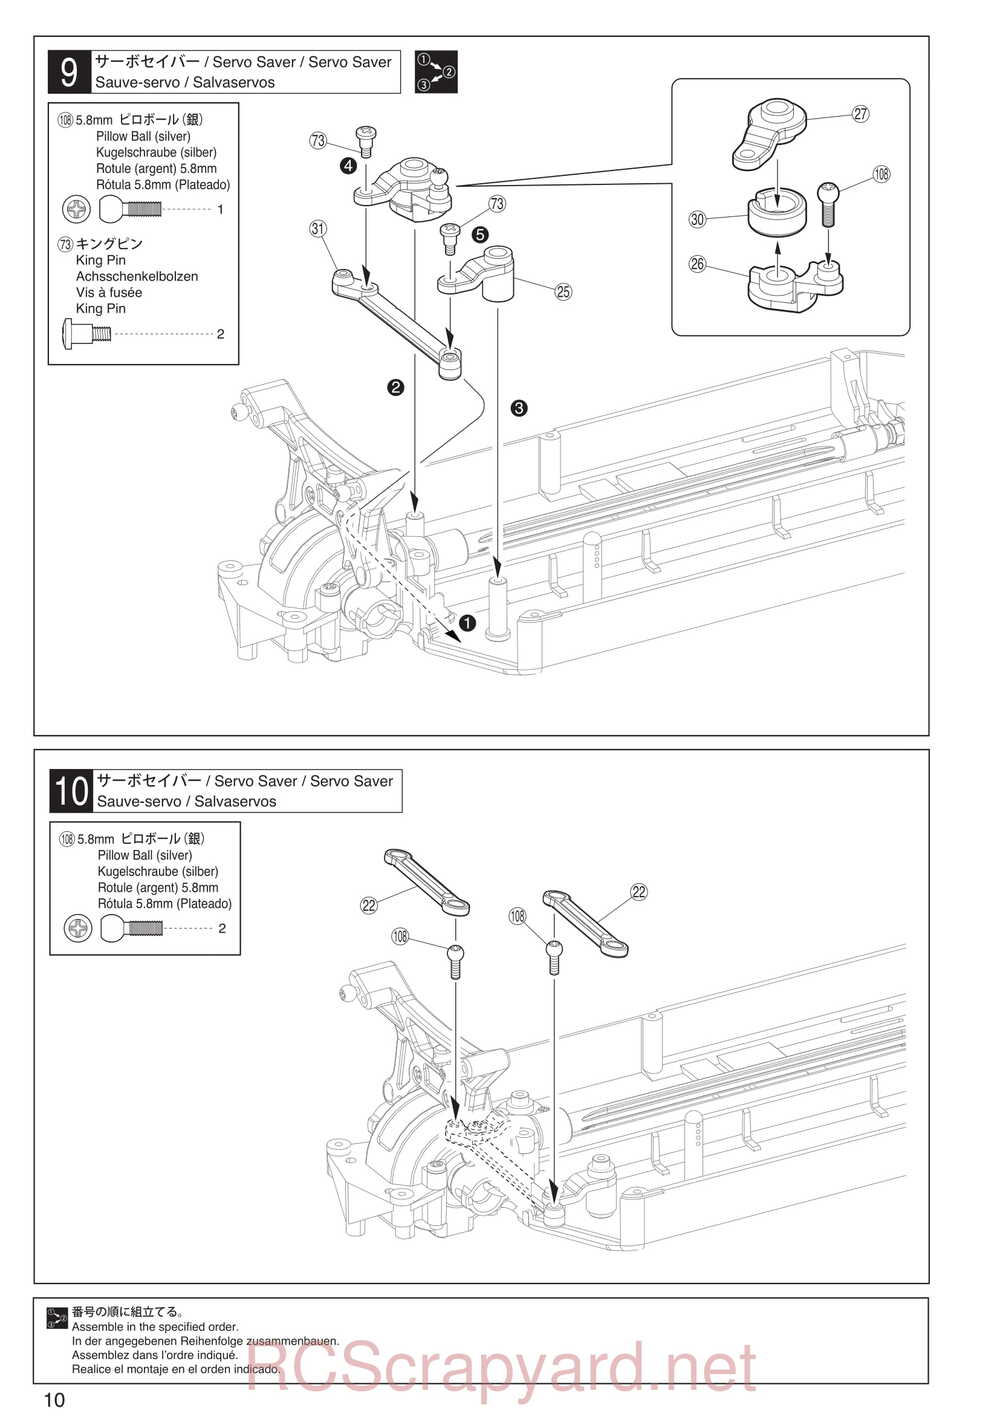 Kyosho - 30930T1 - EP Fazer KOBRA - Manual - Page 10